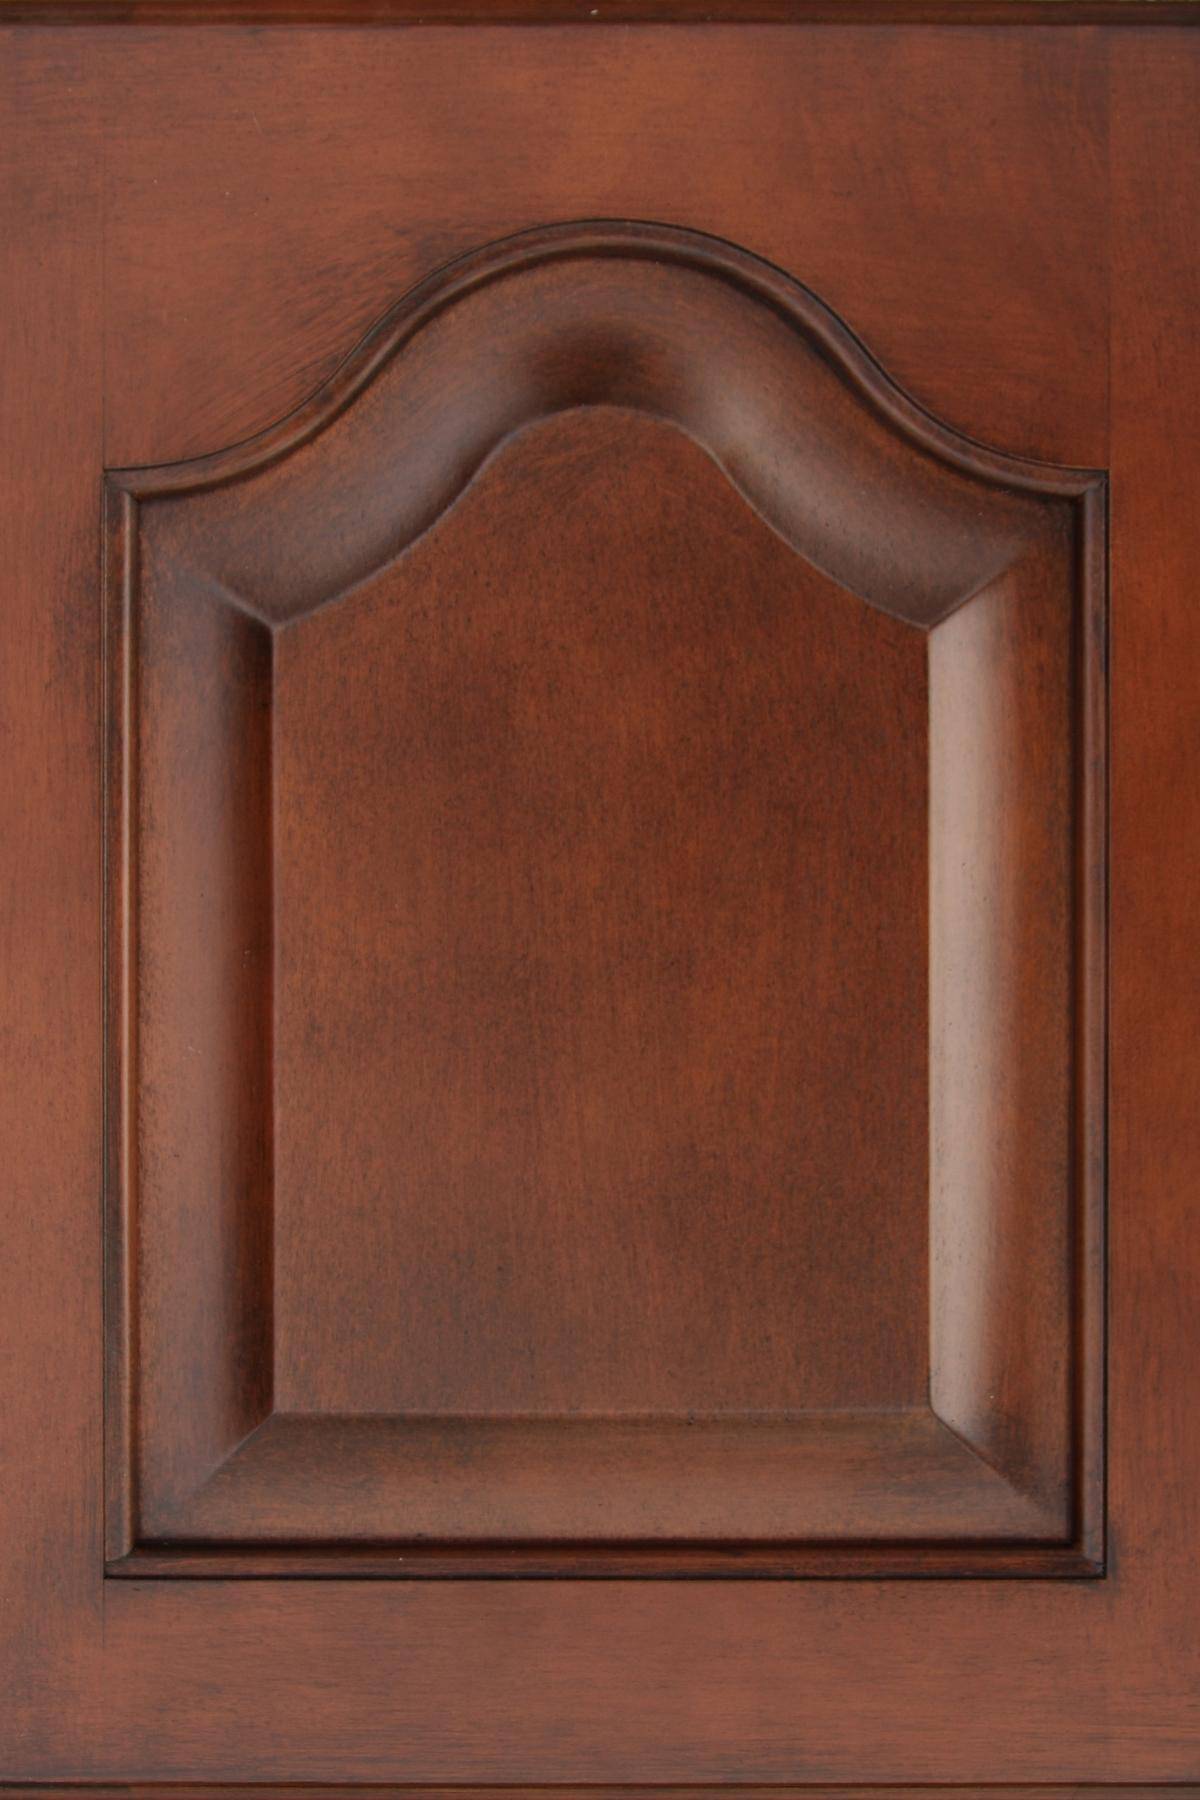 cathedral or arch cabinet door in dark wood